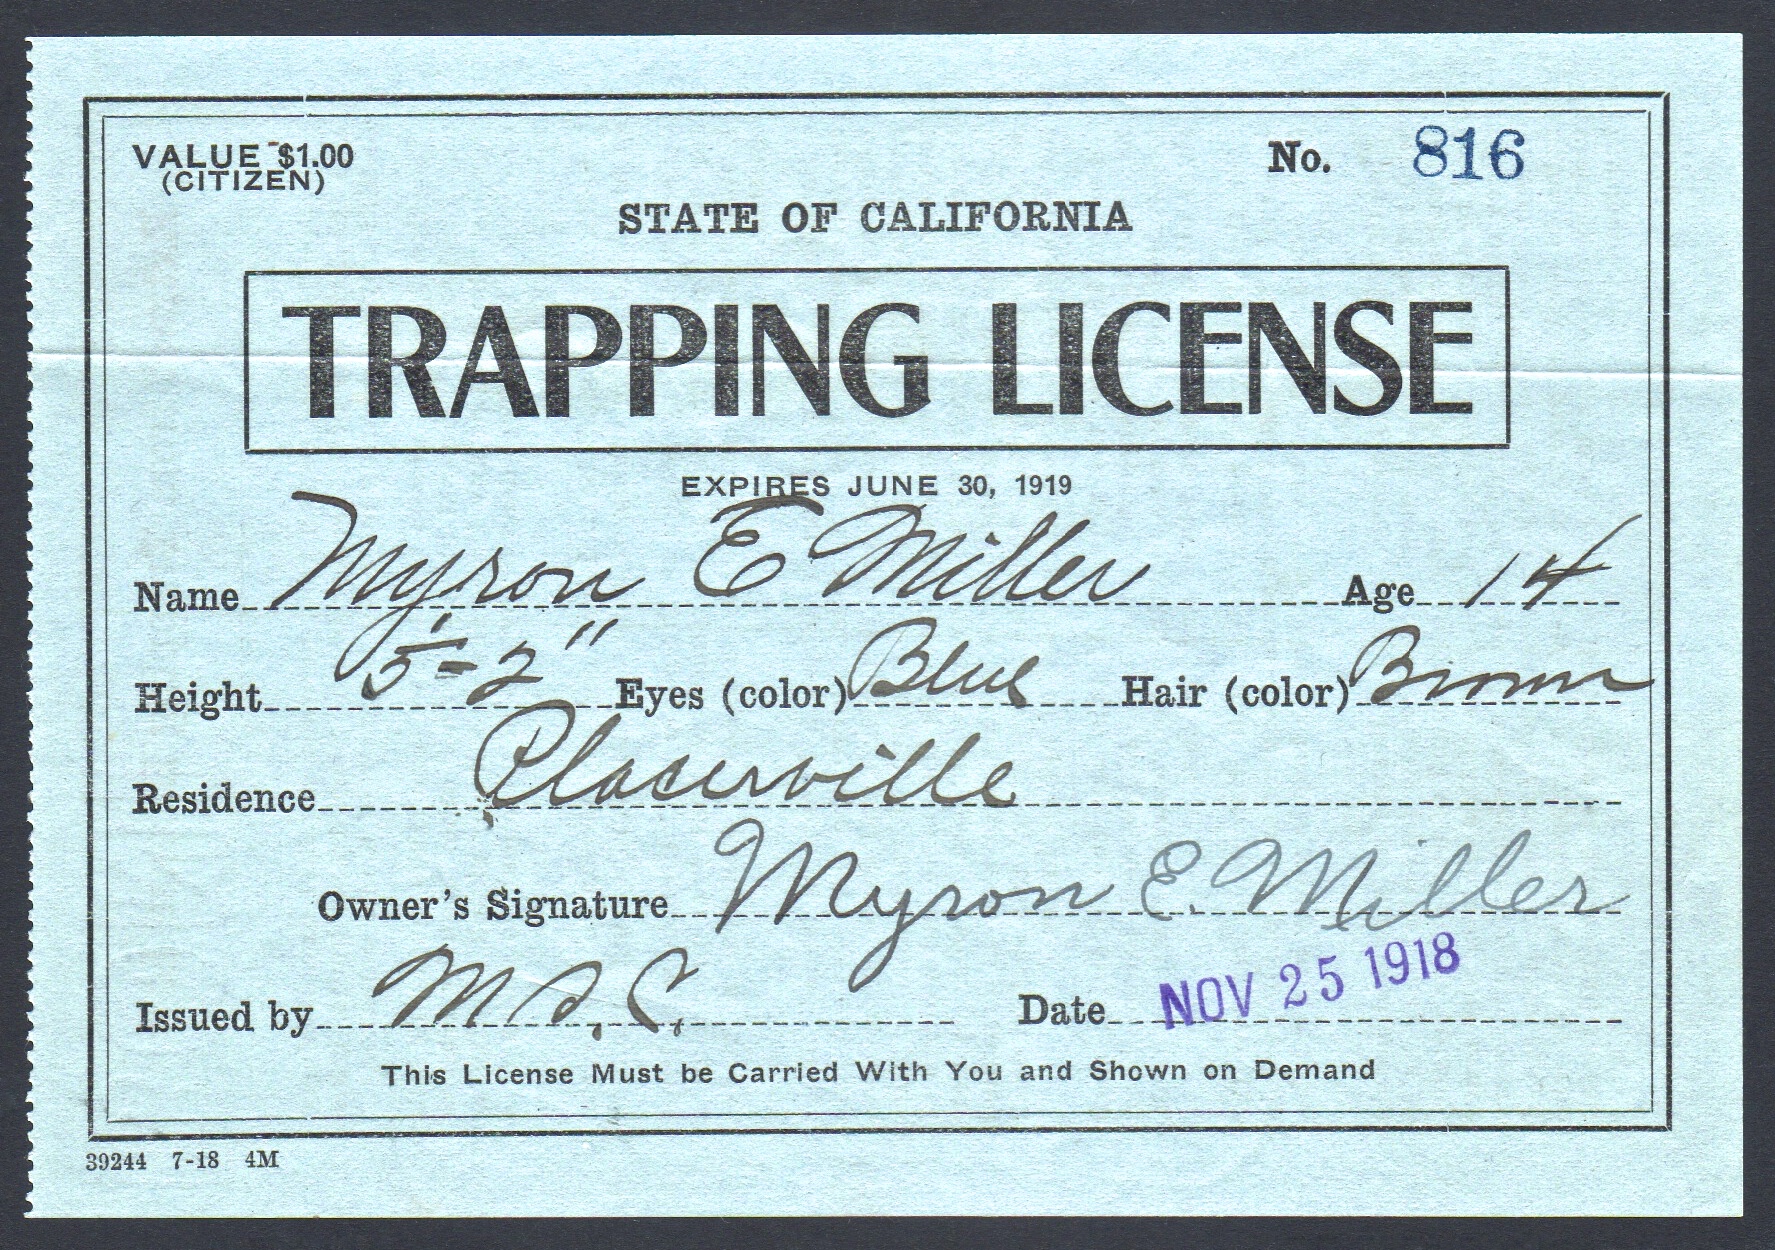 1918-19 California Trapping License